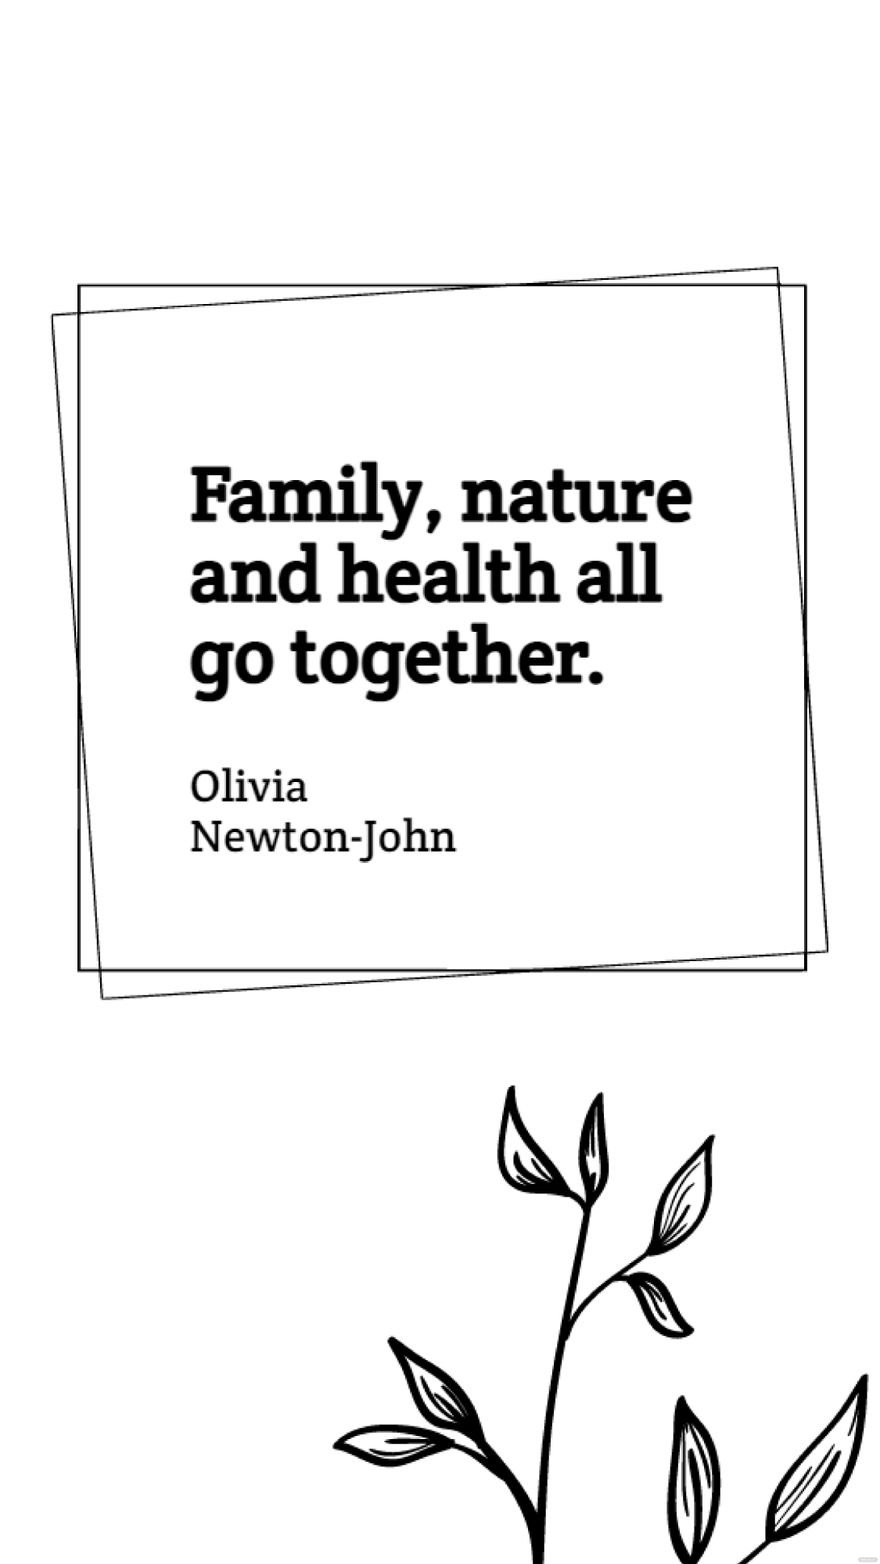 Free Olivia Newton-John - Family, nature and health all go together.